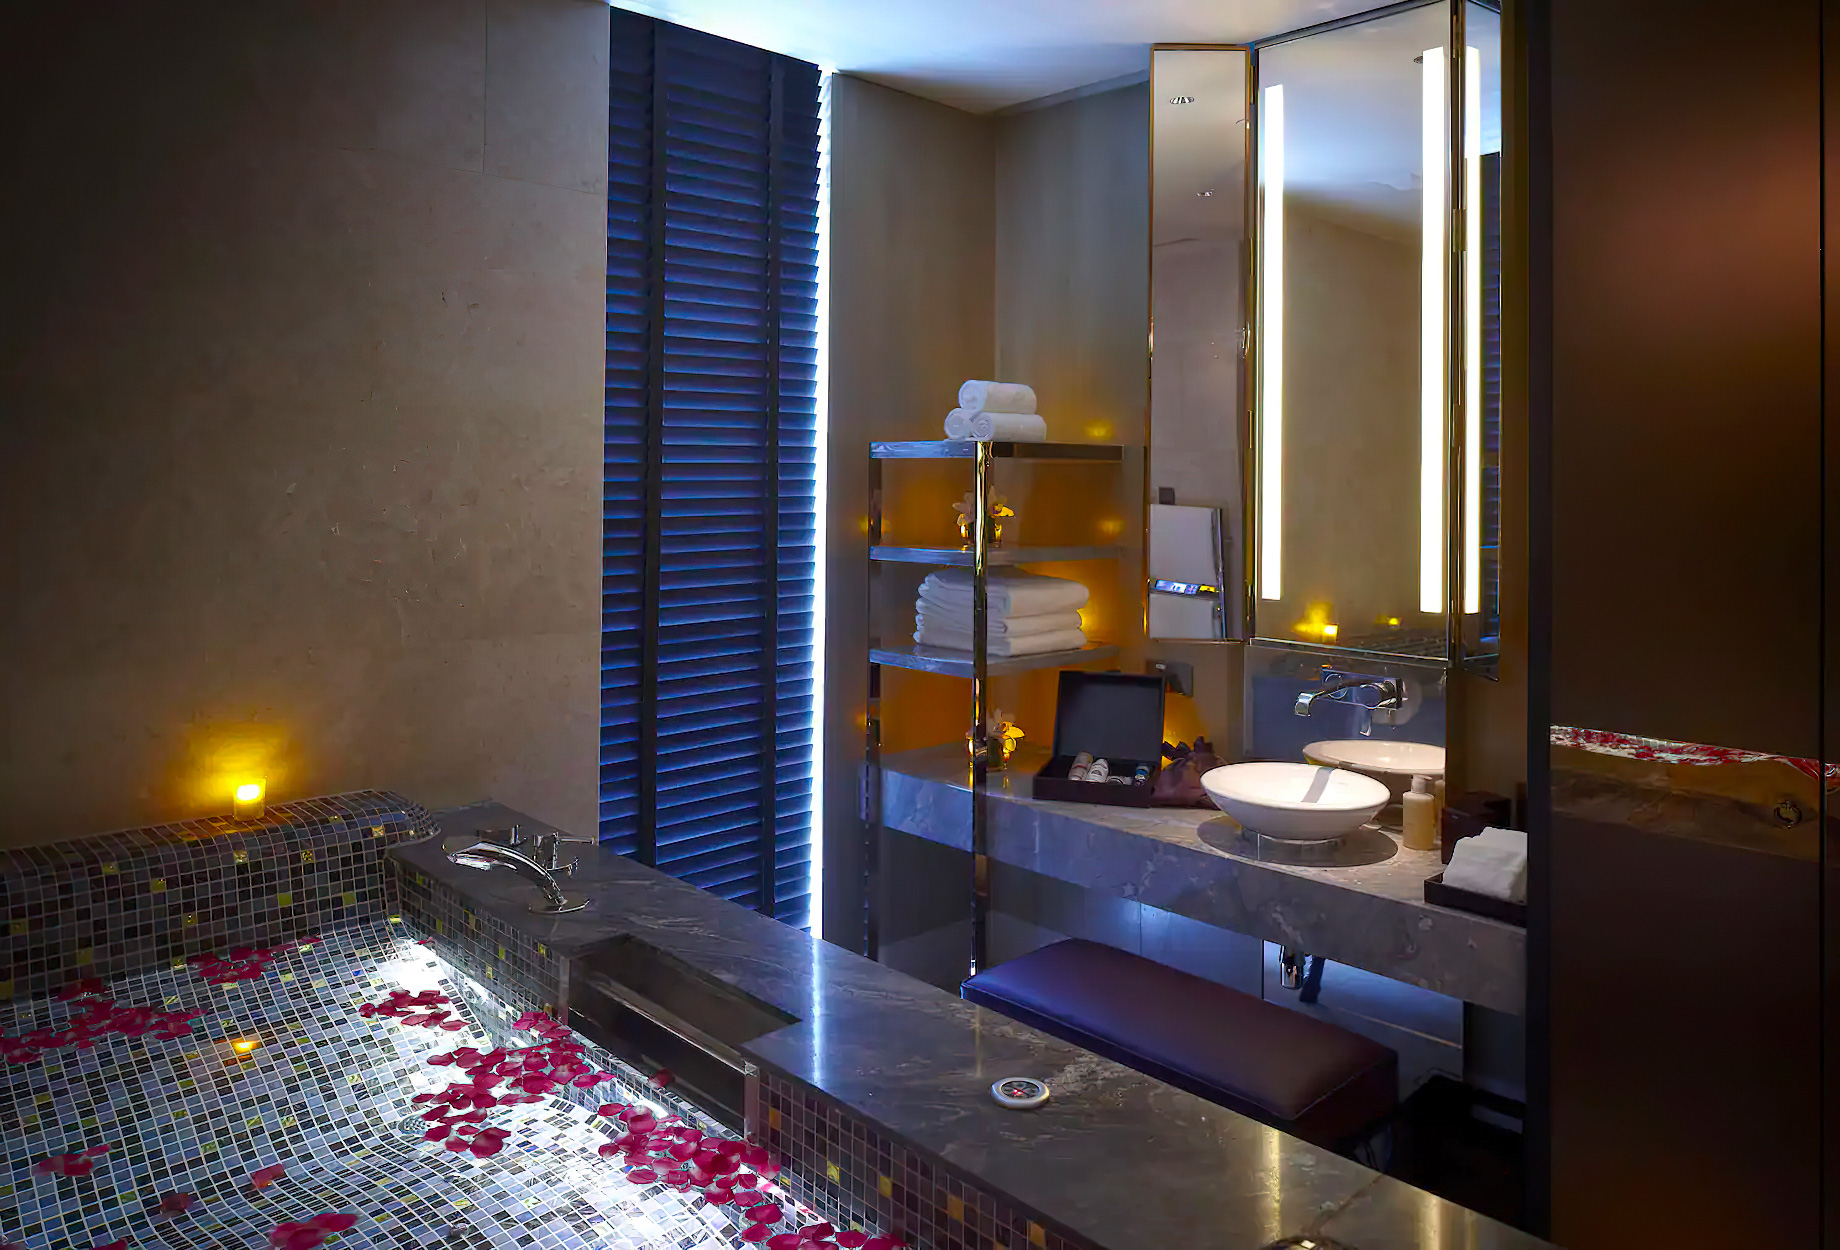 Mandarin Oriental, Singapore Hotel – Singapore – Spa Vitality Pool